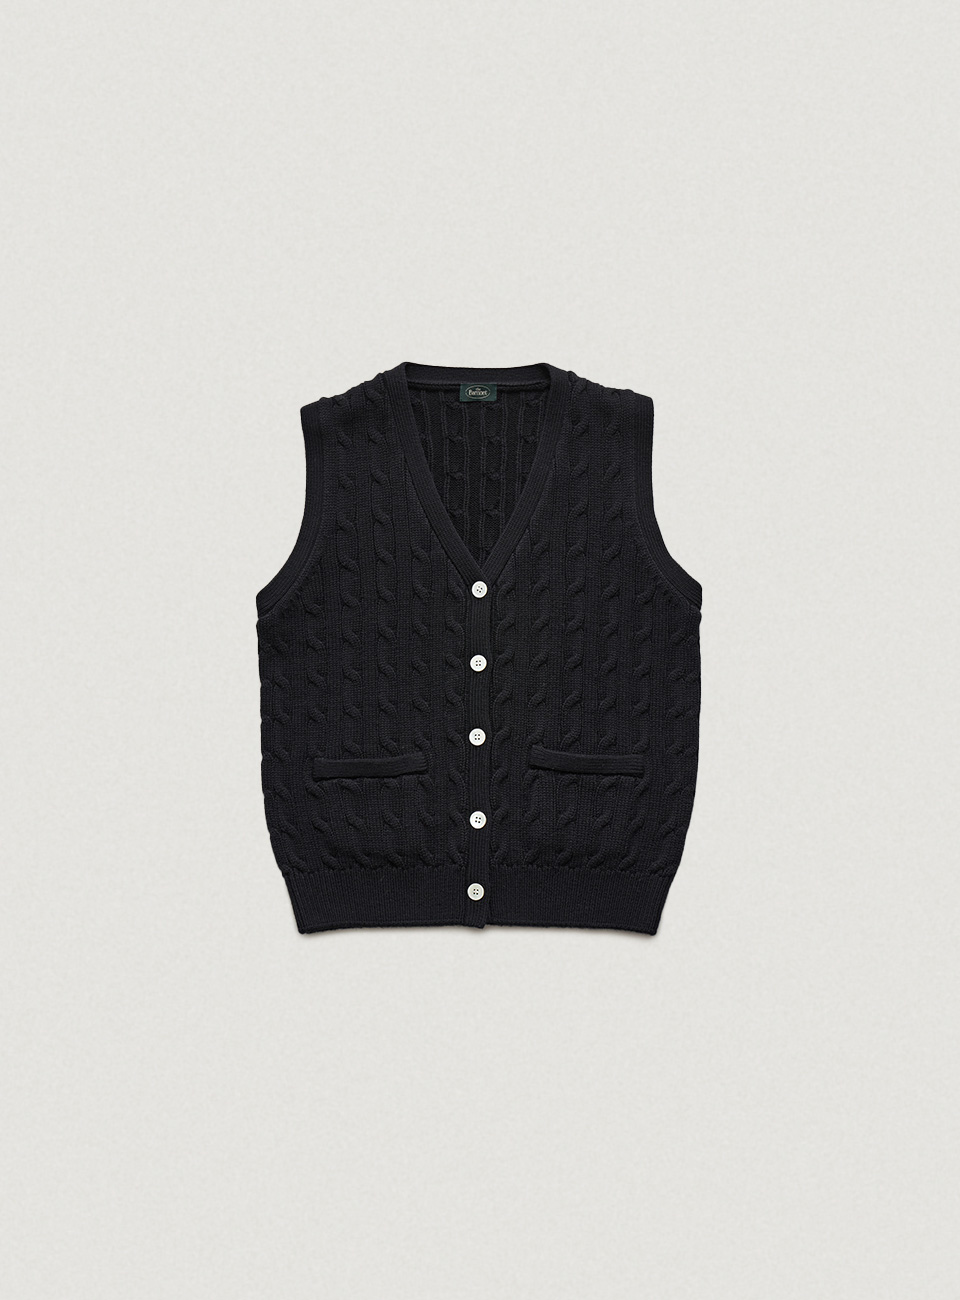 Black Anne Cable Knit Cardigan Vest [6월 중순 순차 배송]